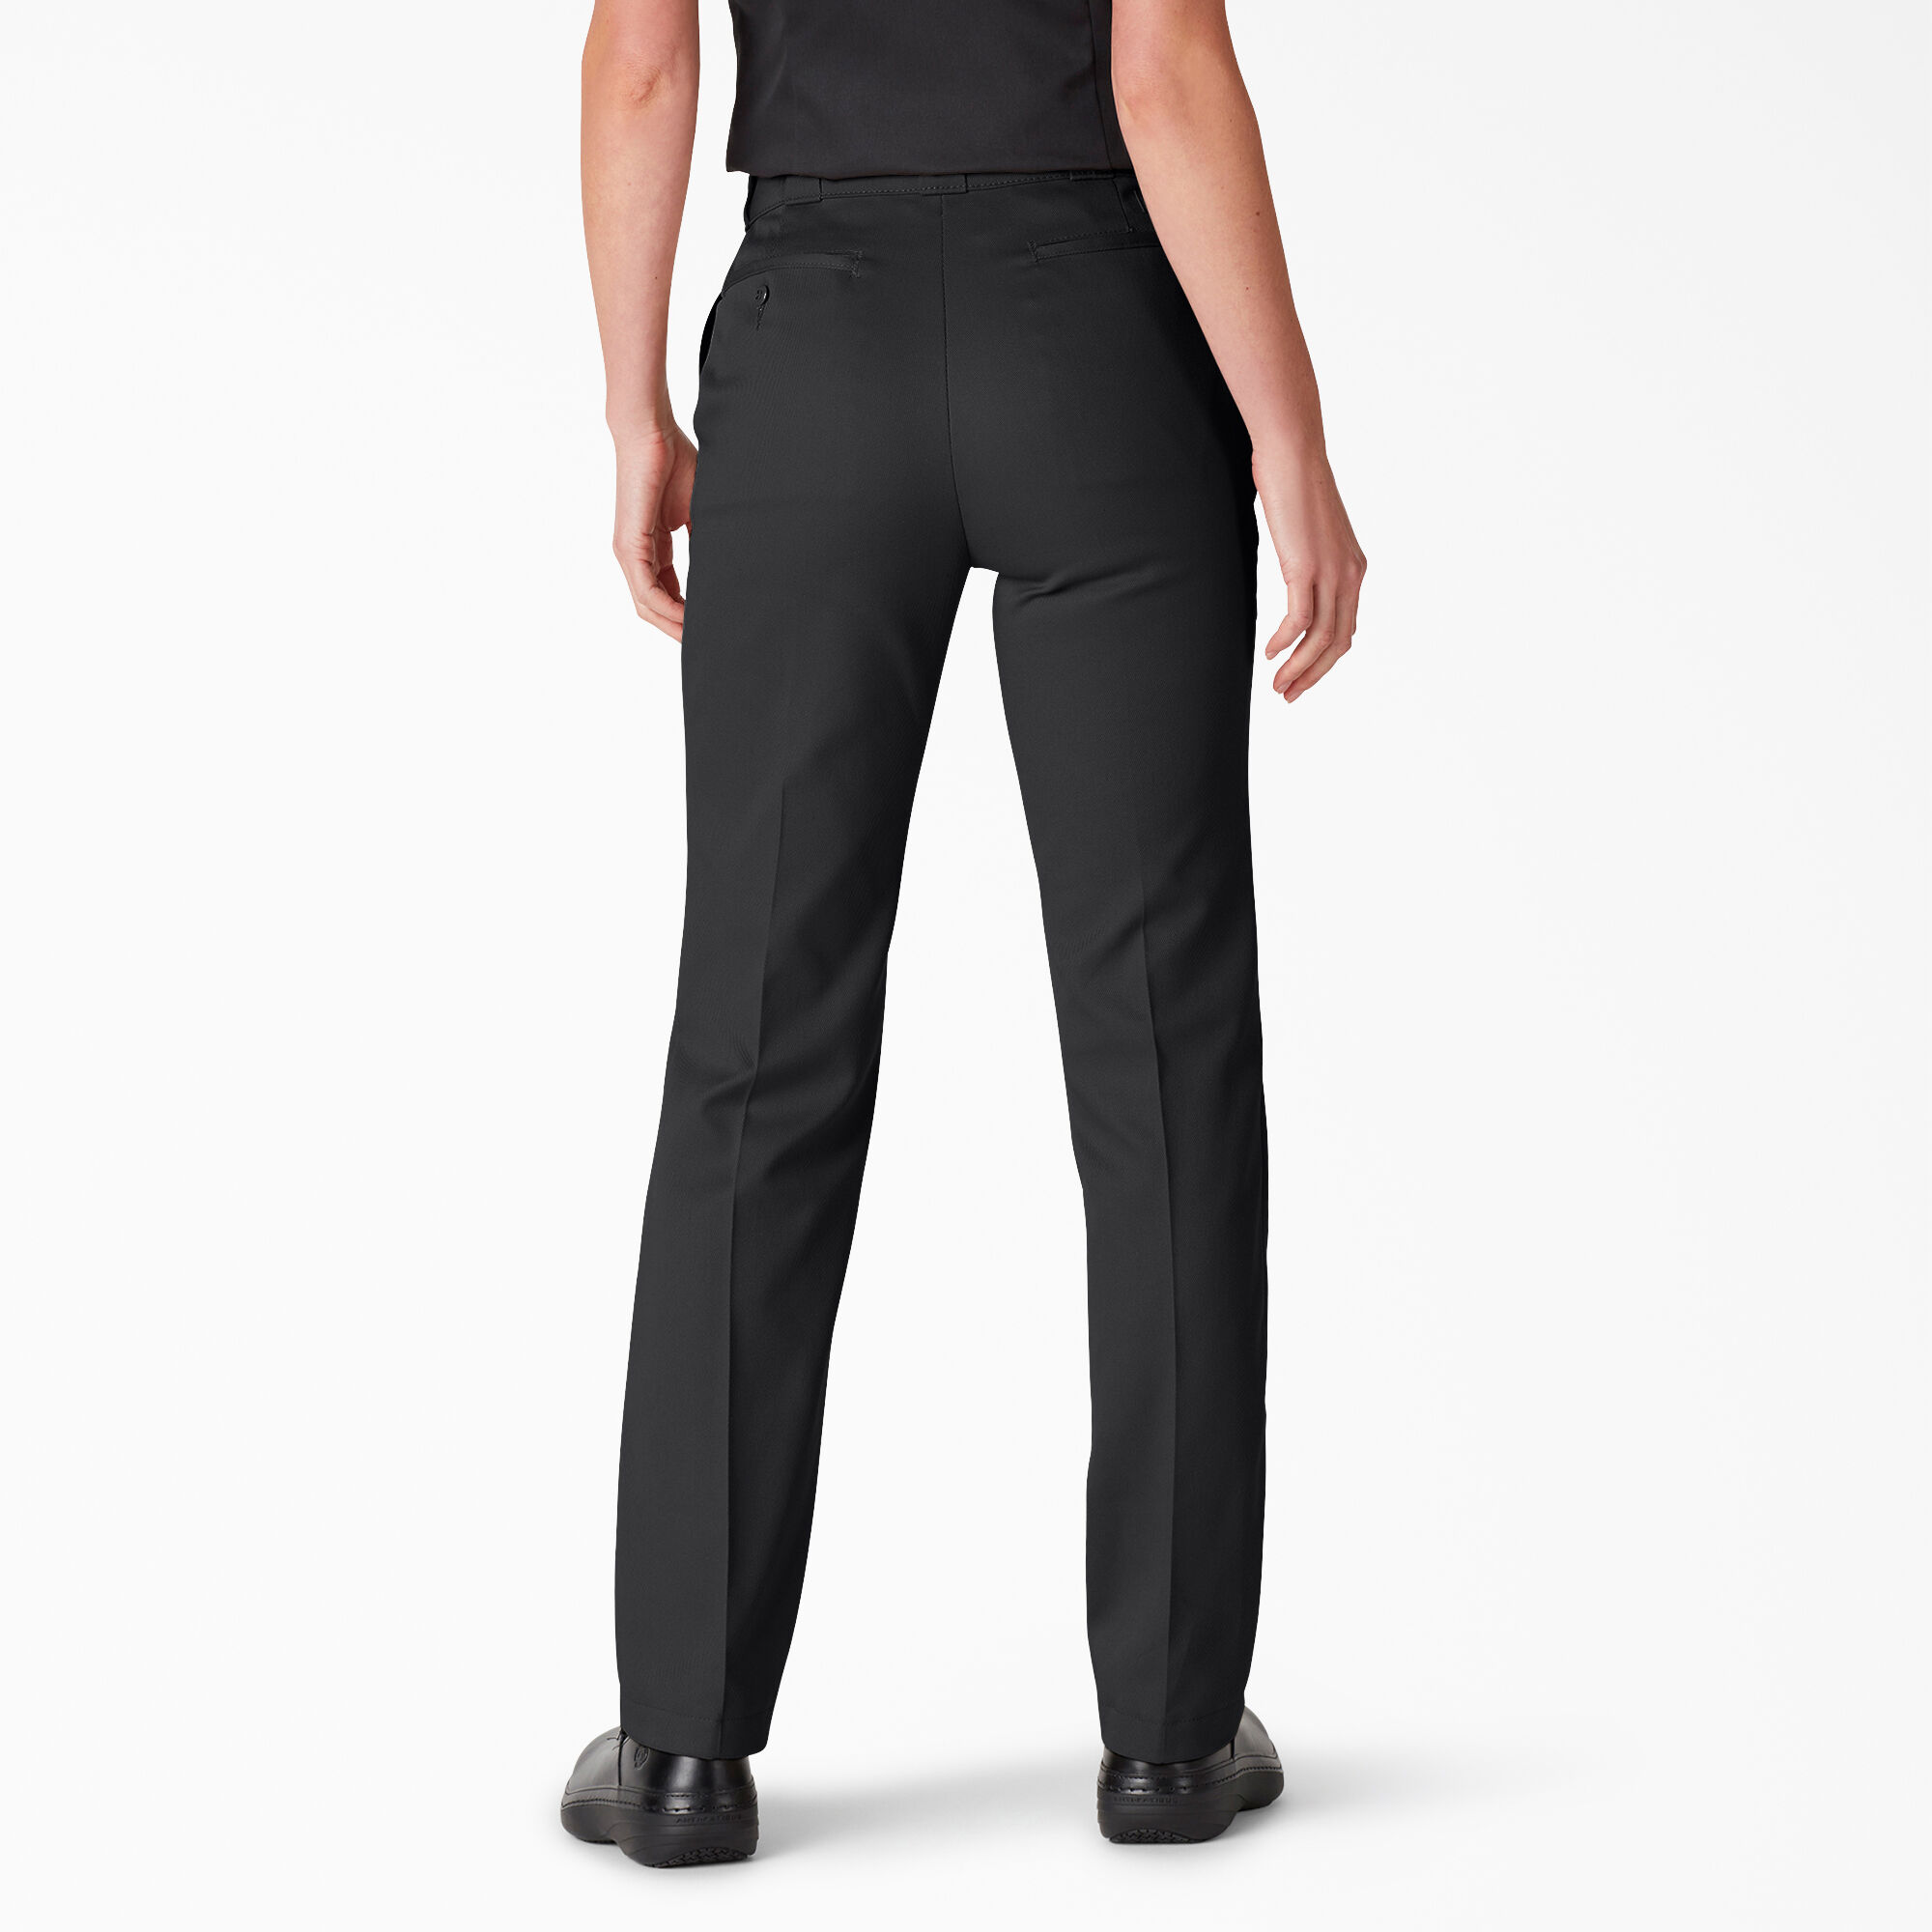 Buy Contour Athletics Mens MechStretch Work Pants for Men Slim Fit Black  3230 at Amazonin